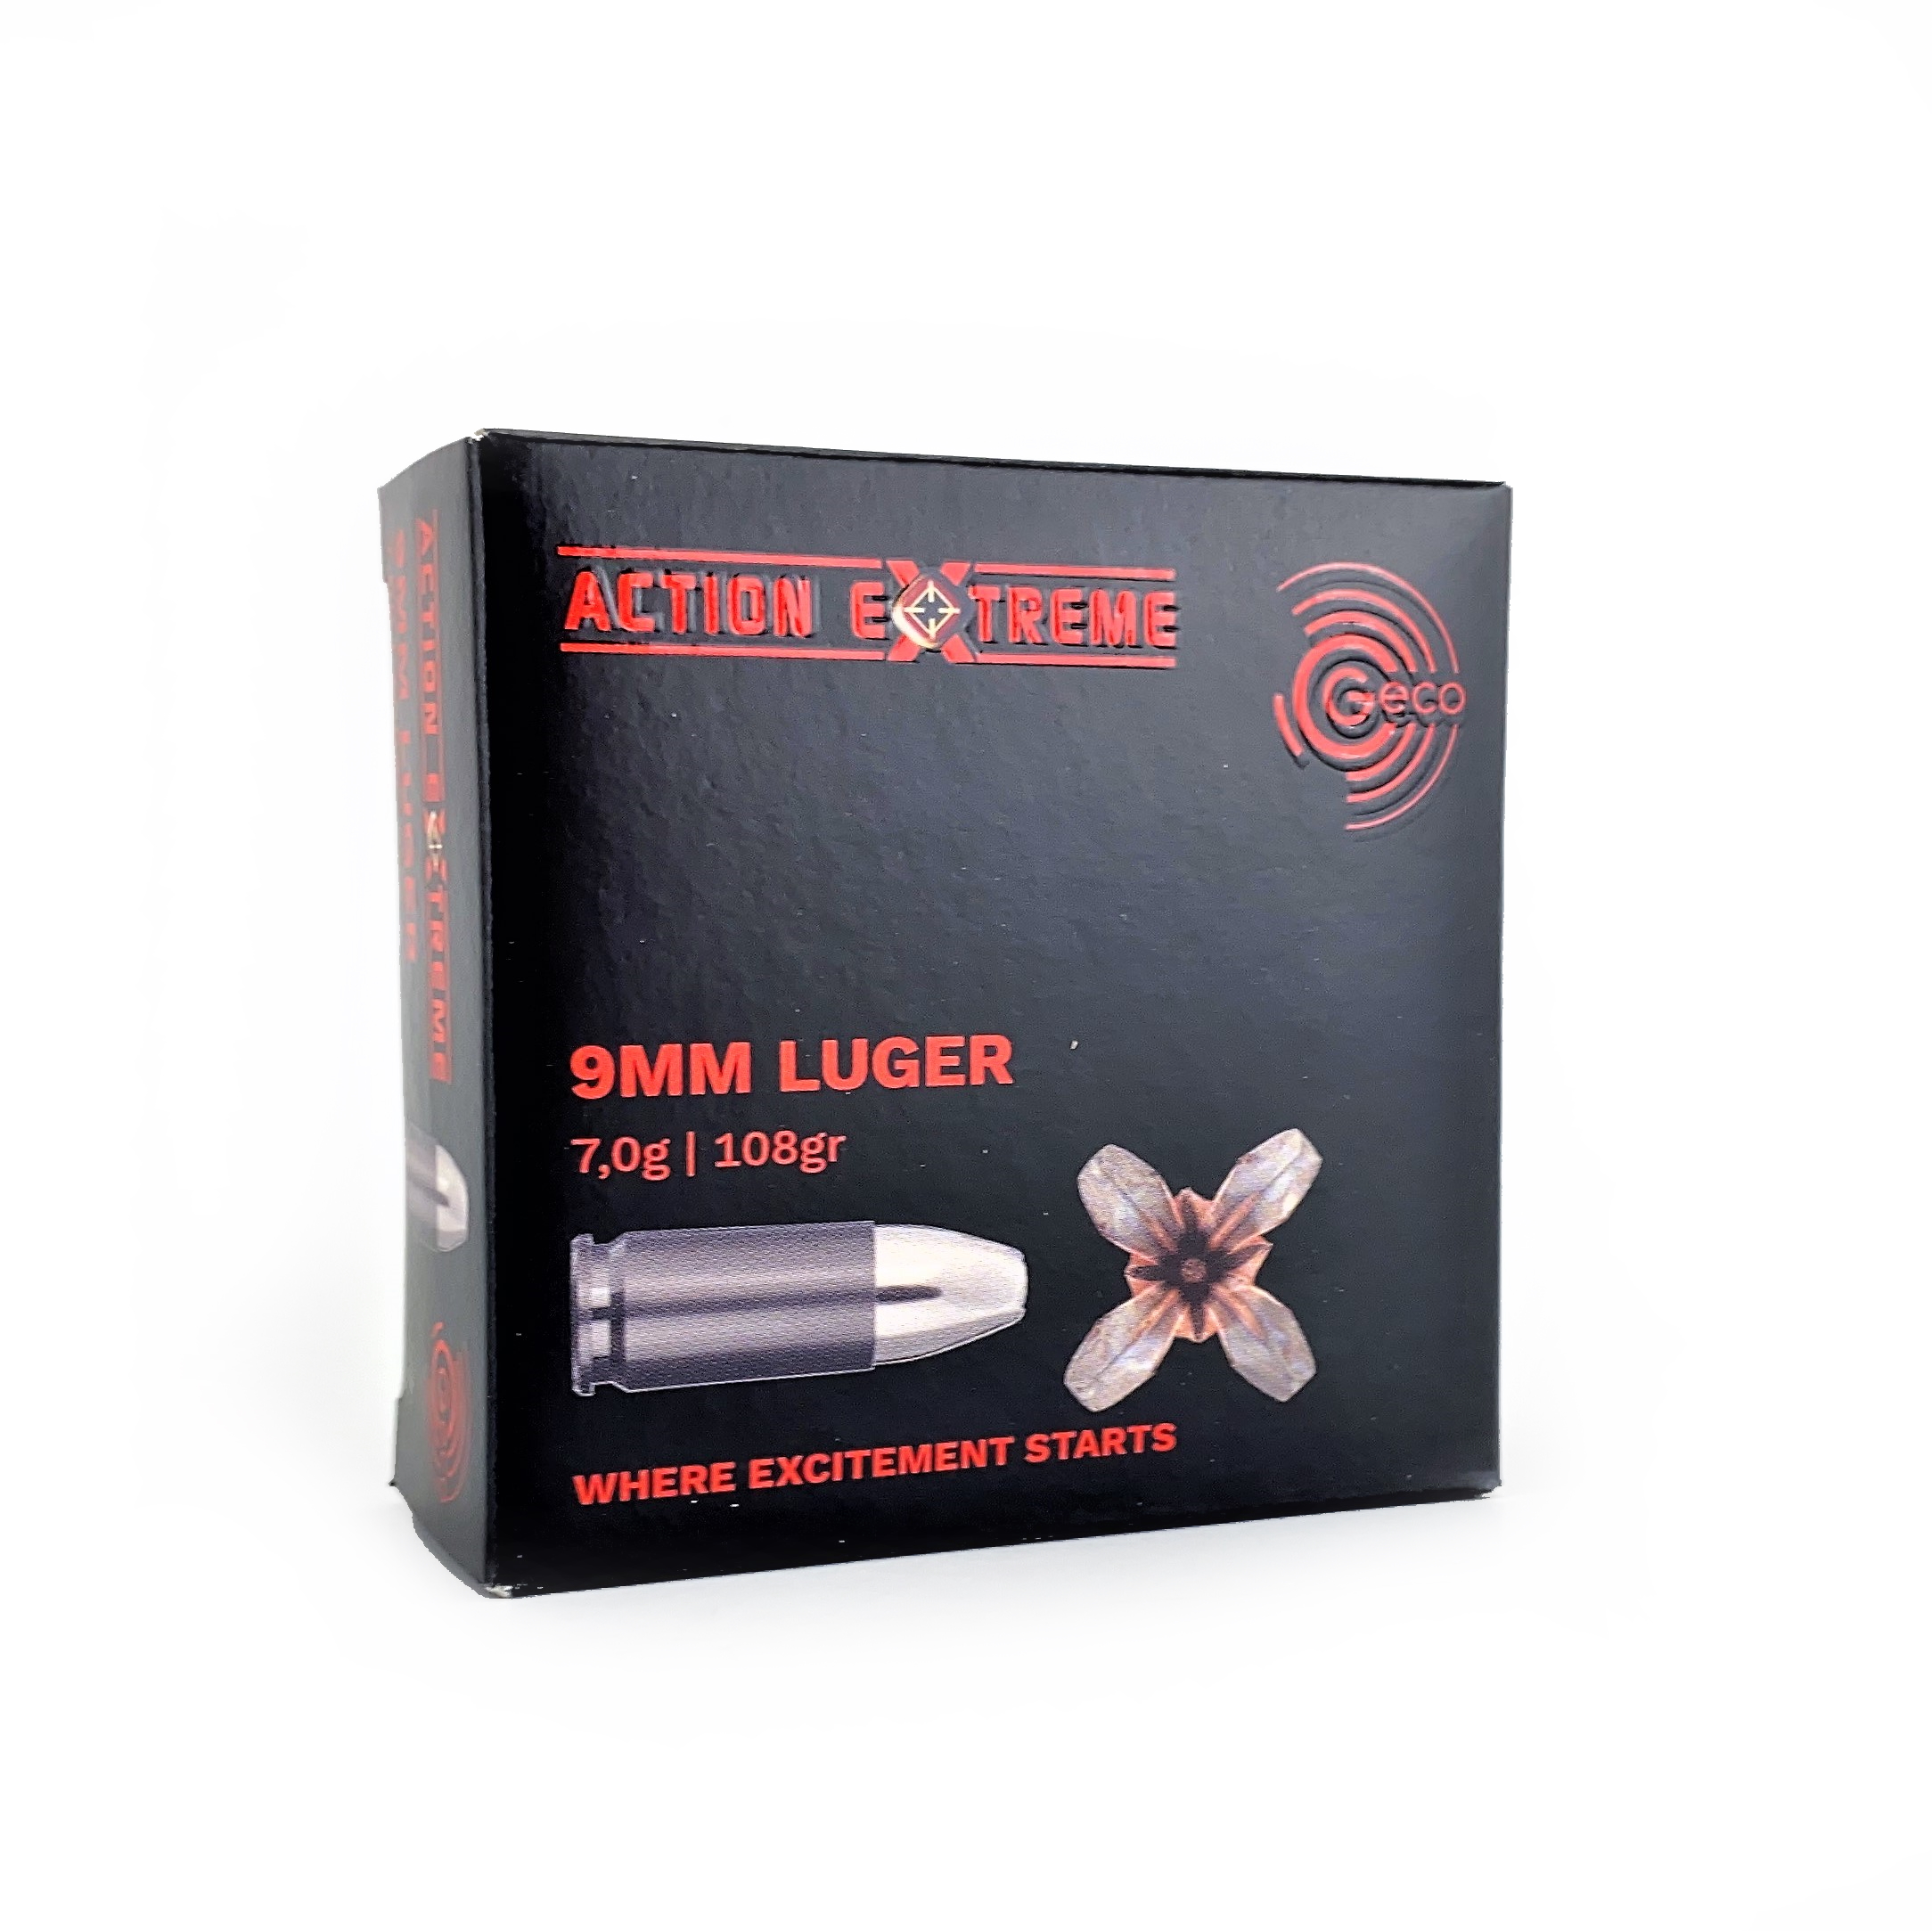 GECO Action Extrem 9mm Luger 7,0g Deformationsgeschoss | F.A.S.T. Onlineshop